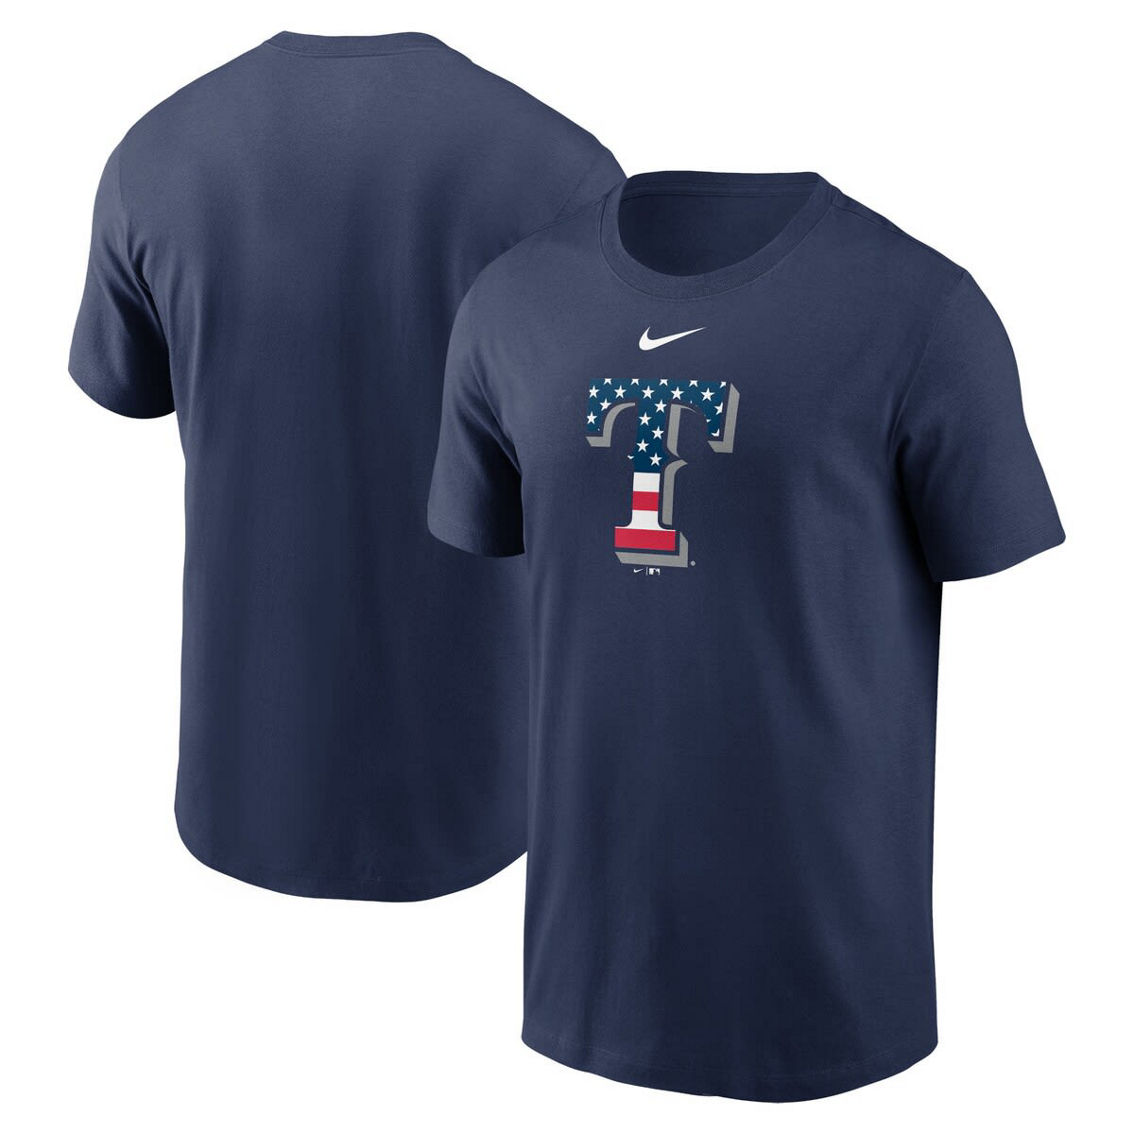 Nike Men's Navy Texas Rangers Americana T-Shirt - Image 2 of 4